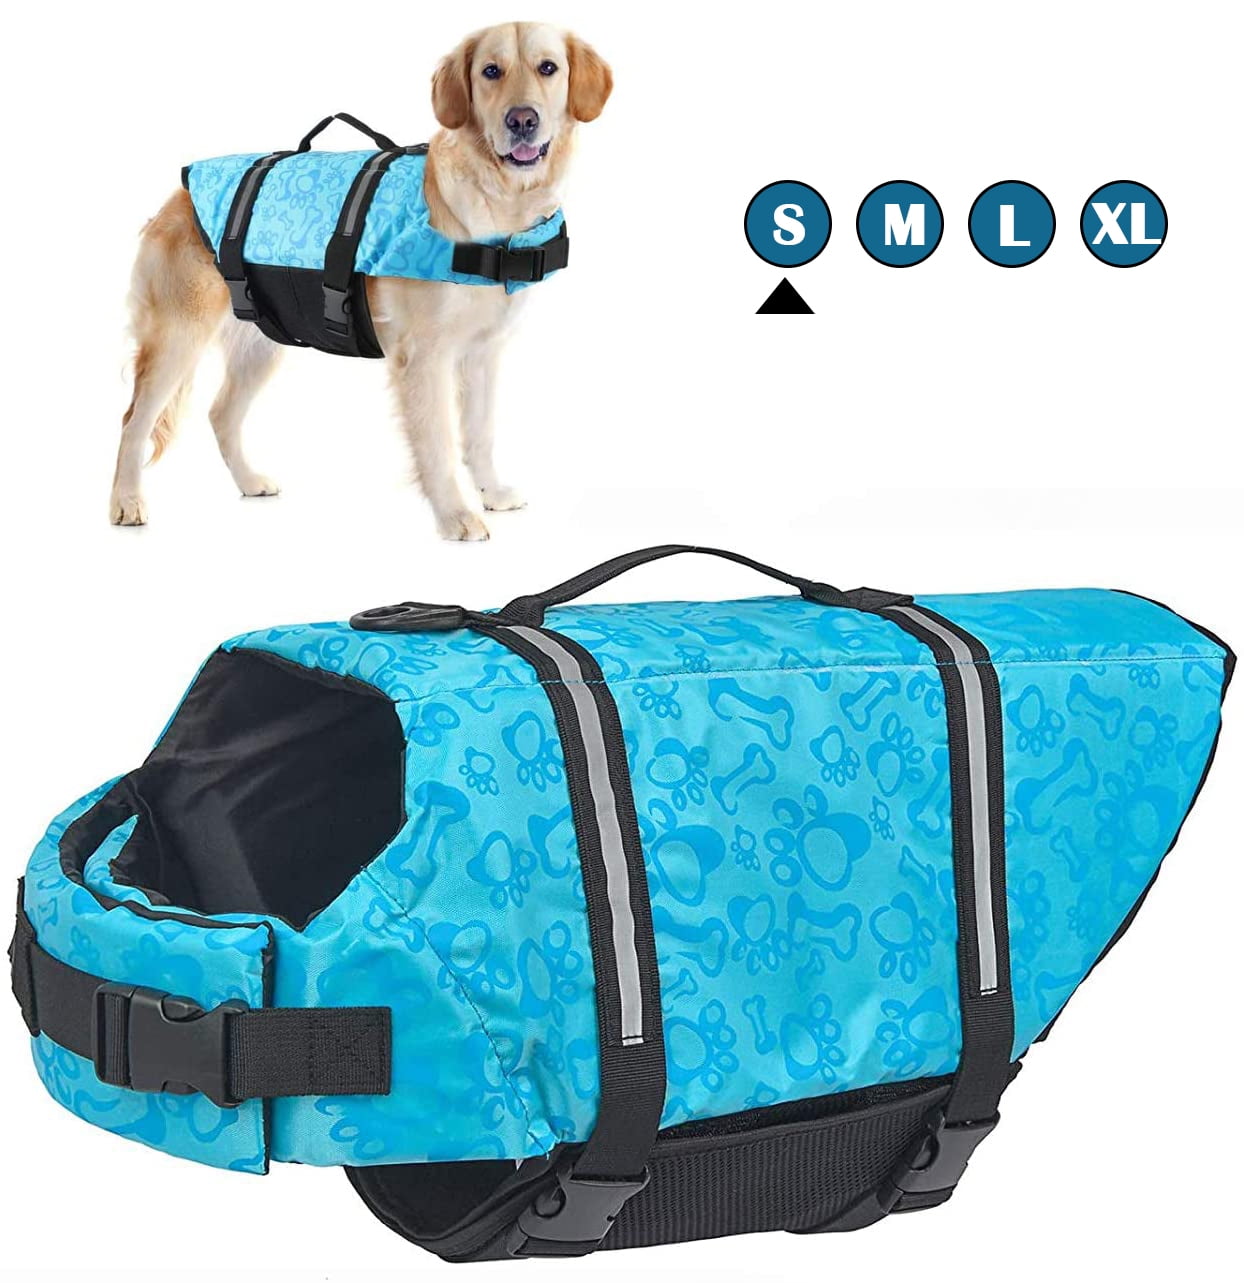 Dog Life Jacket Pet Safety Vest Preserver Puppy Swimming Float Clothes Bags Set